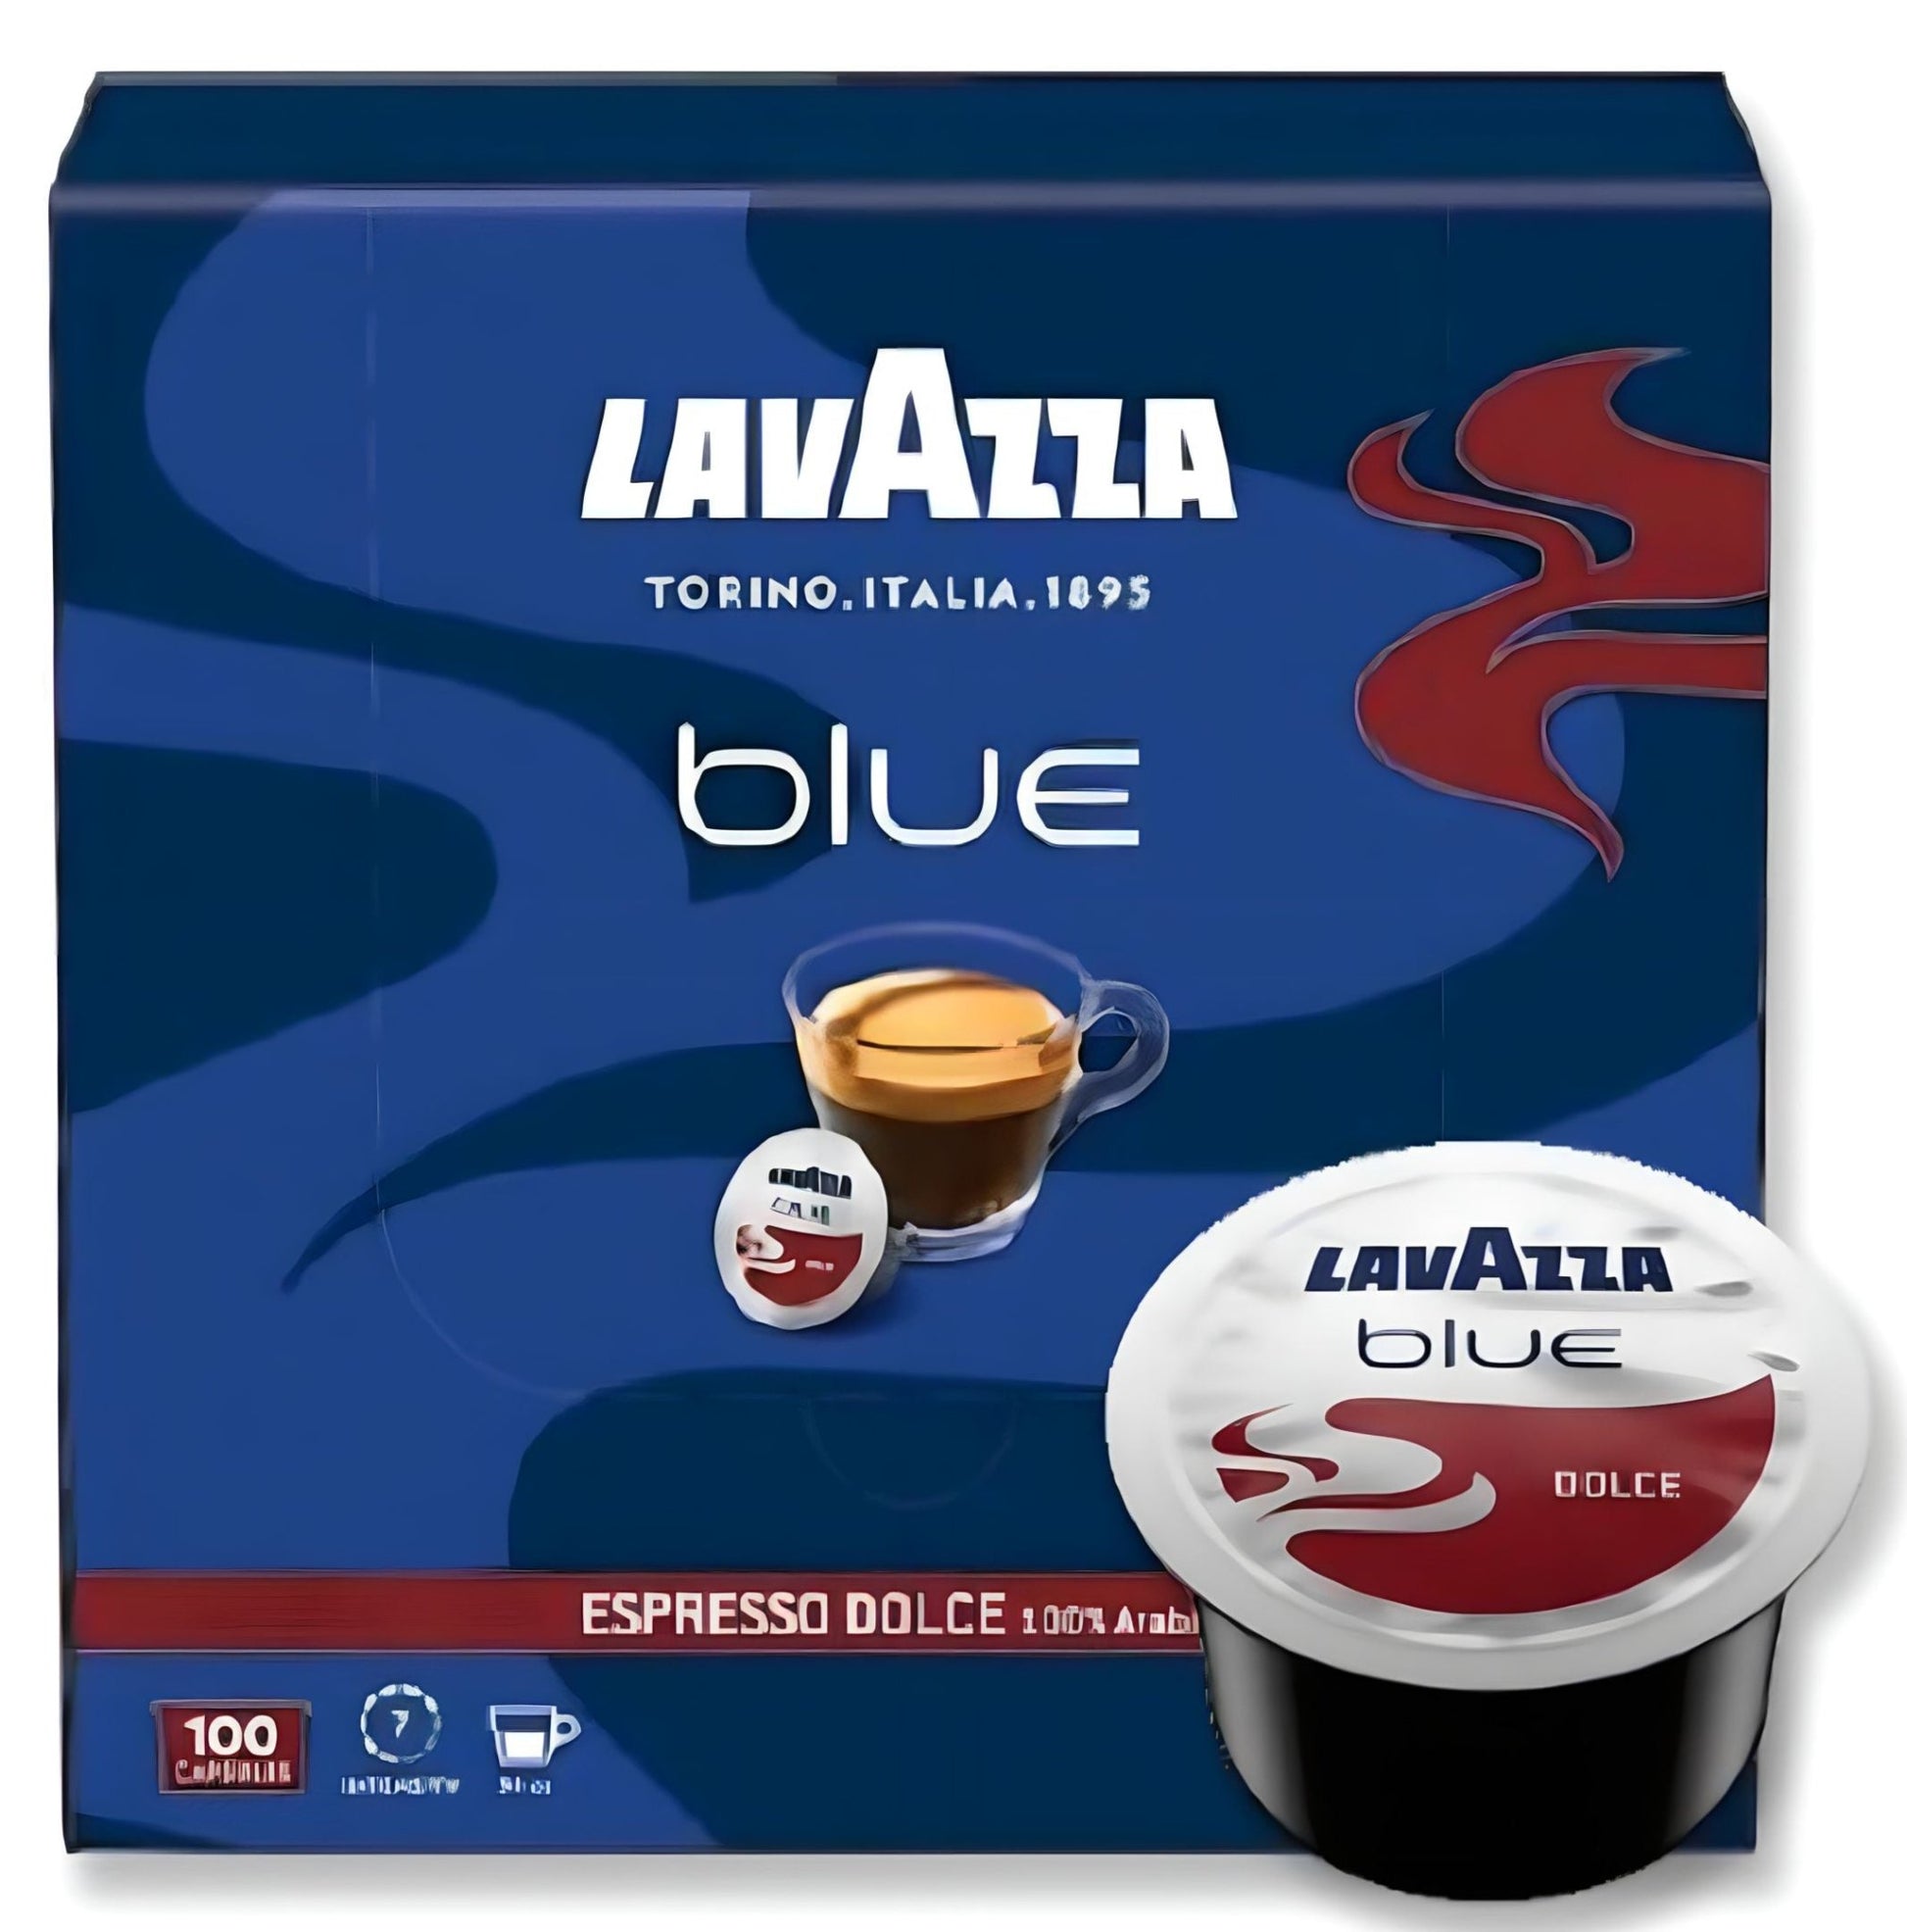 PROMO Lavazza Blue Dolce kapsule | 100 komadaBIM SHOP PROMO Lavazza Blue Dolce kapsule | 100 komada - BIM SHOP